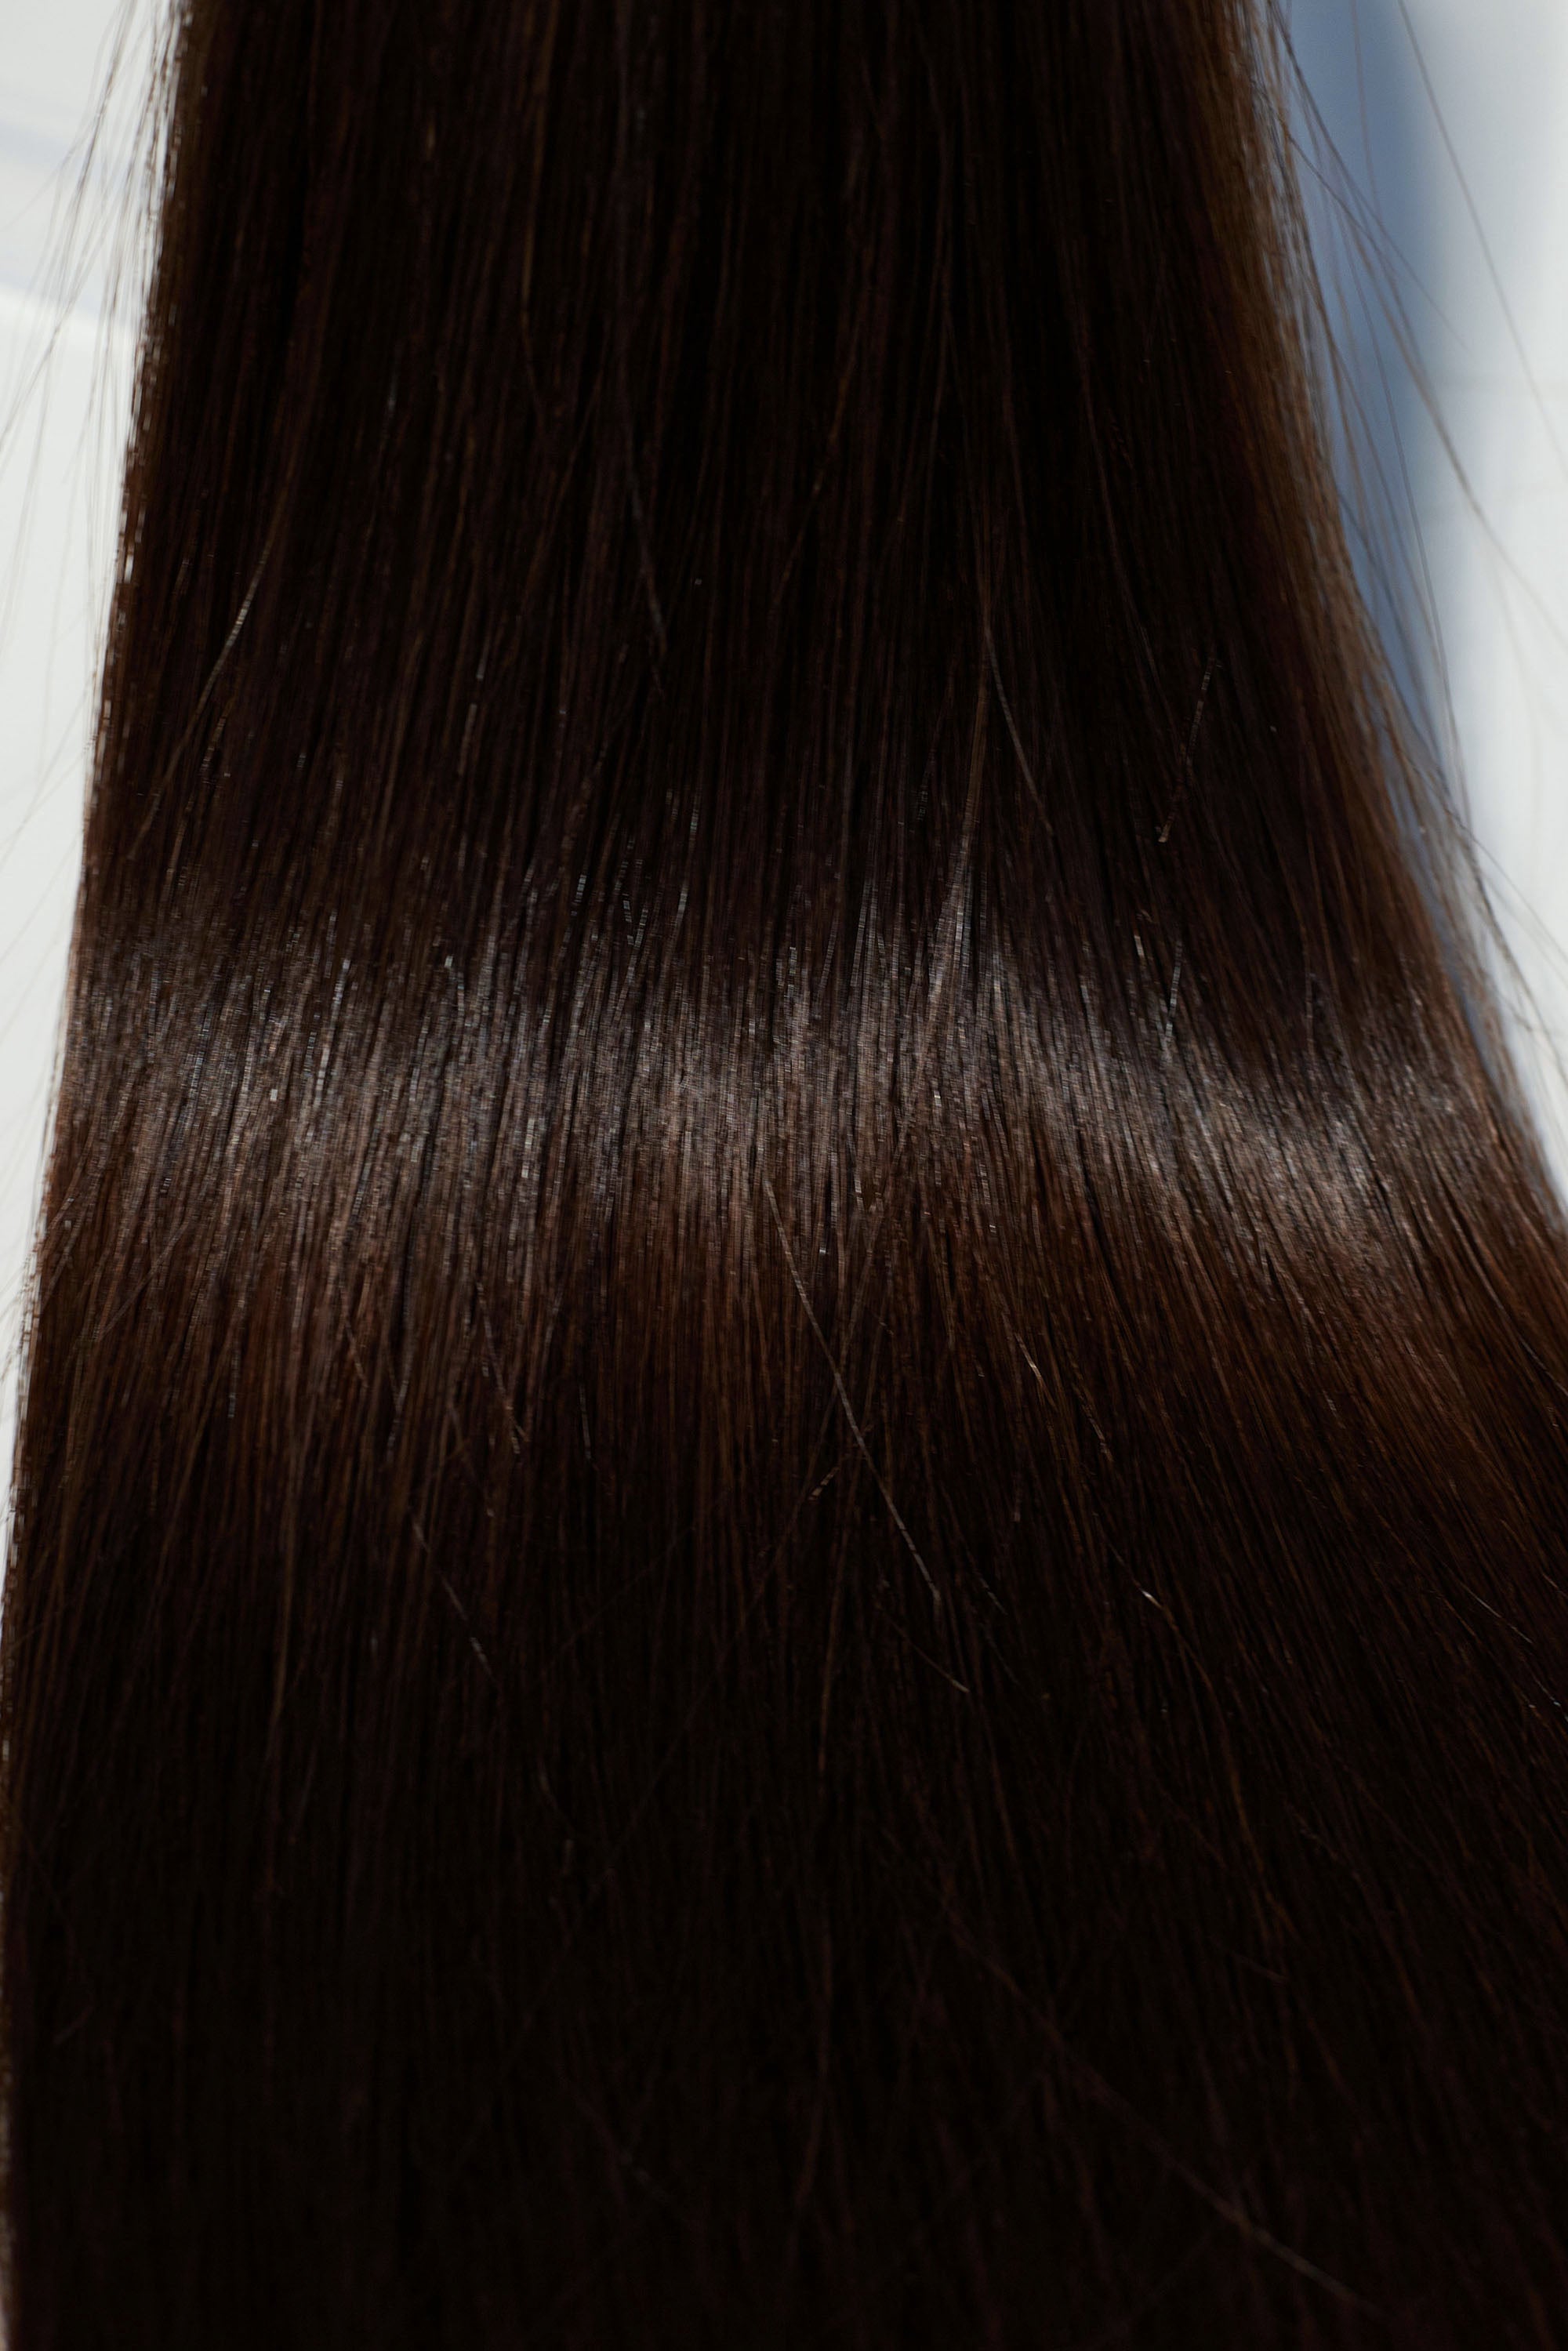 Behair professional Keratin Tip "Premium" 26" (65cm) Natural Straight Dark Coffee Brown #2 - 25g (Standart - 0.7g each pcs) hair extensions